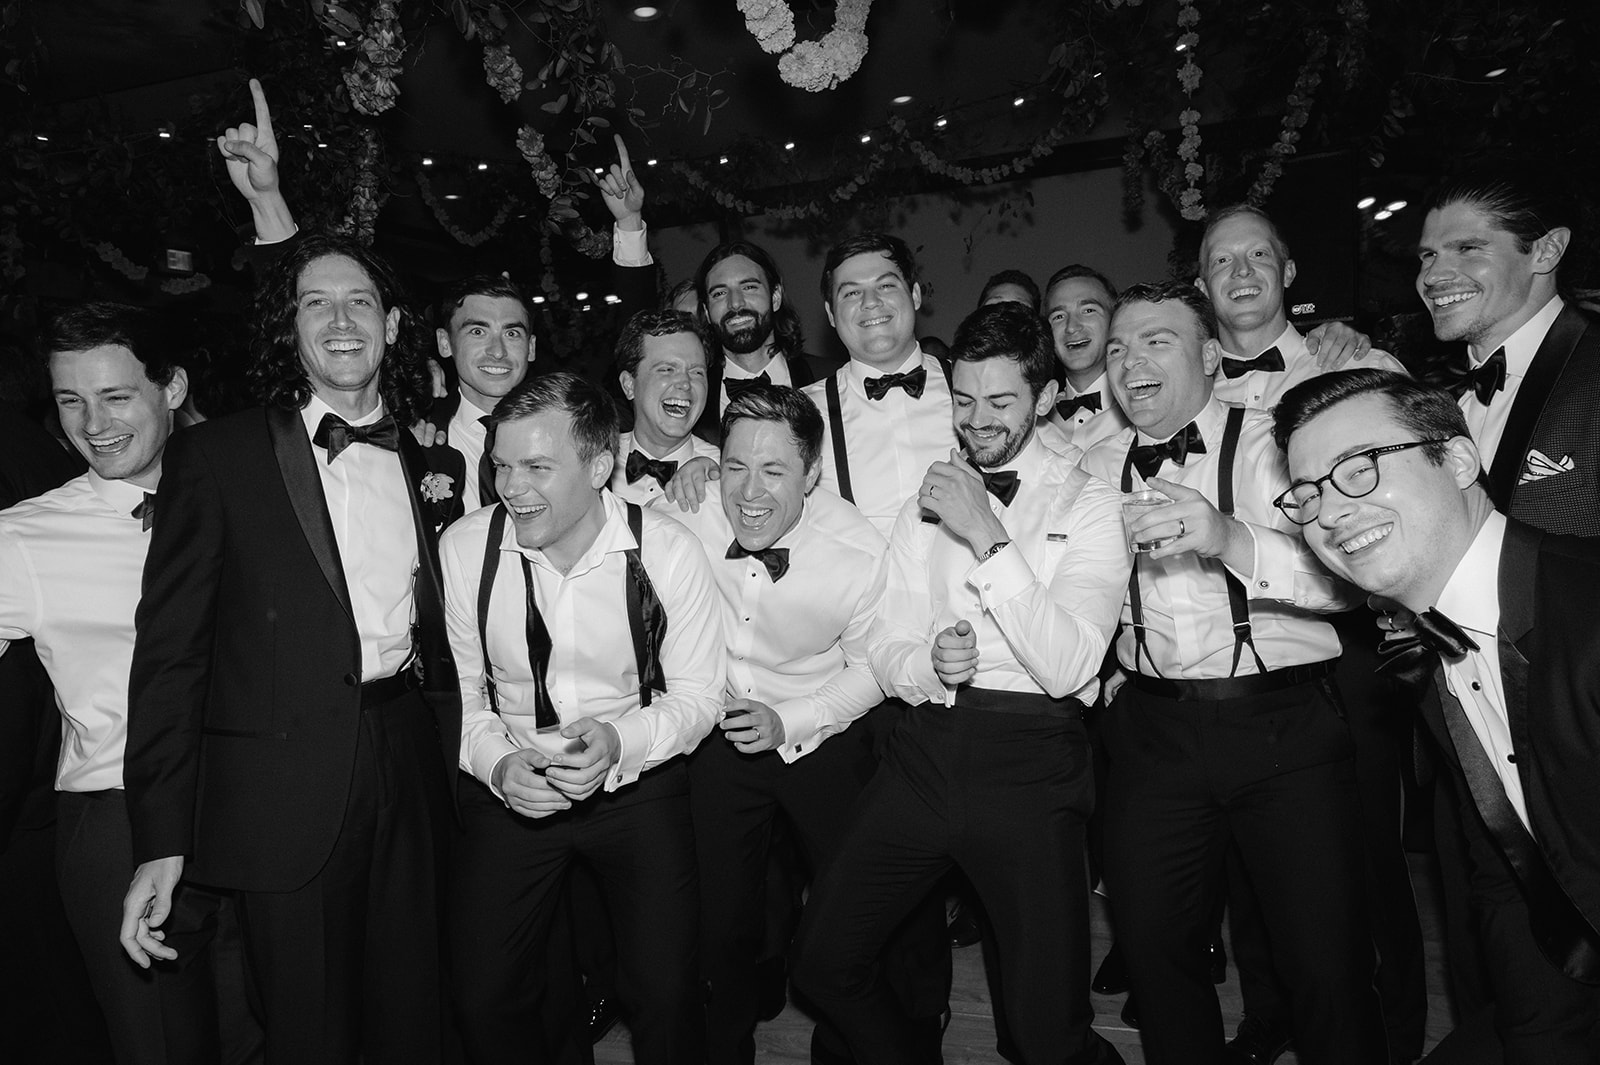 Wedding party groomsmen group photo.